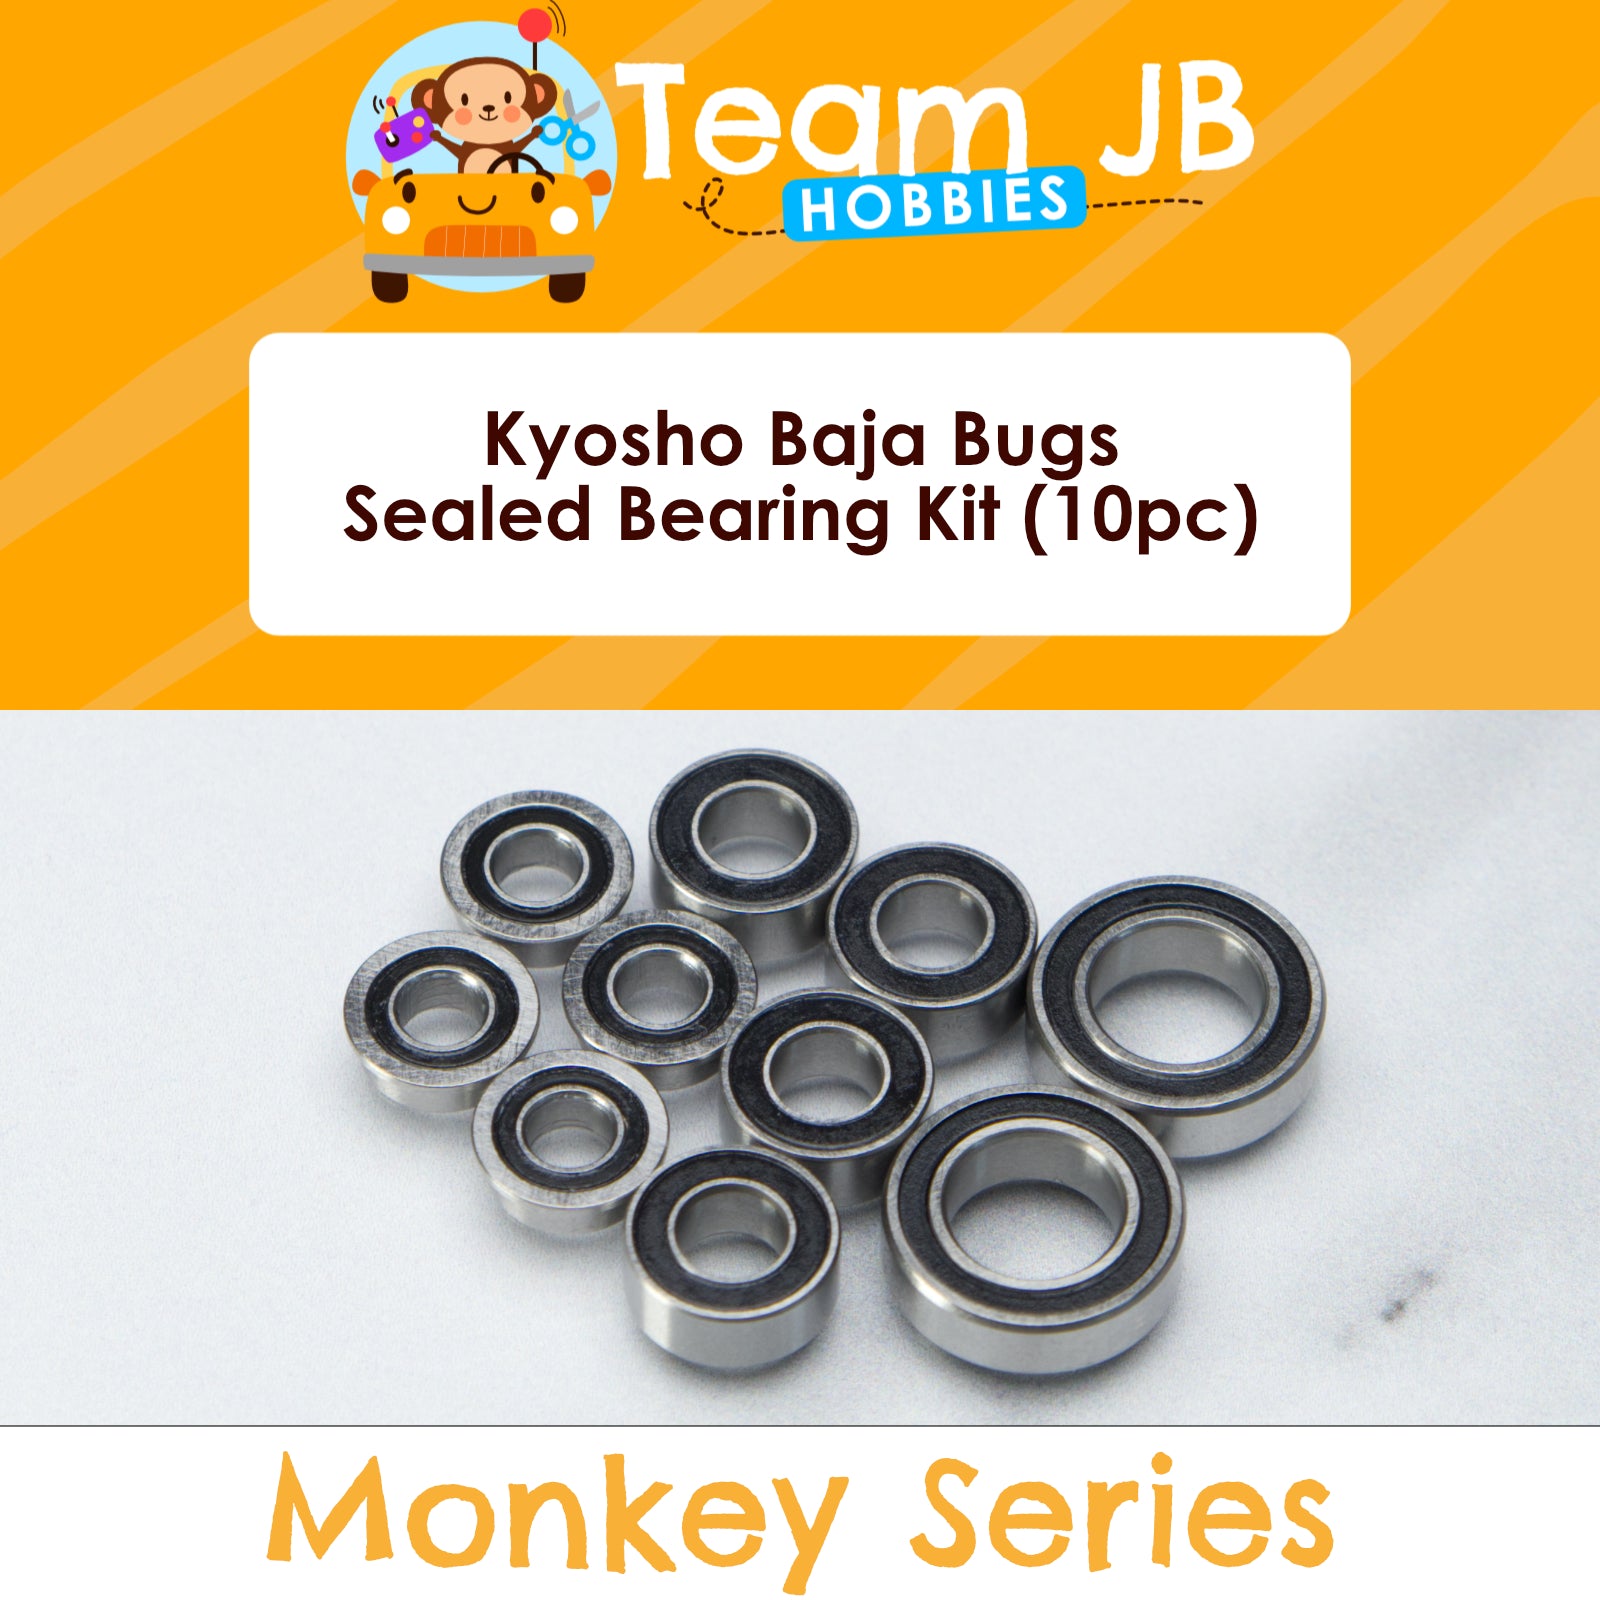 Kyosho Baja Bugs - Sealed Bearing Kit